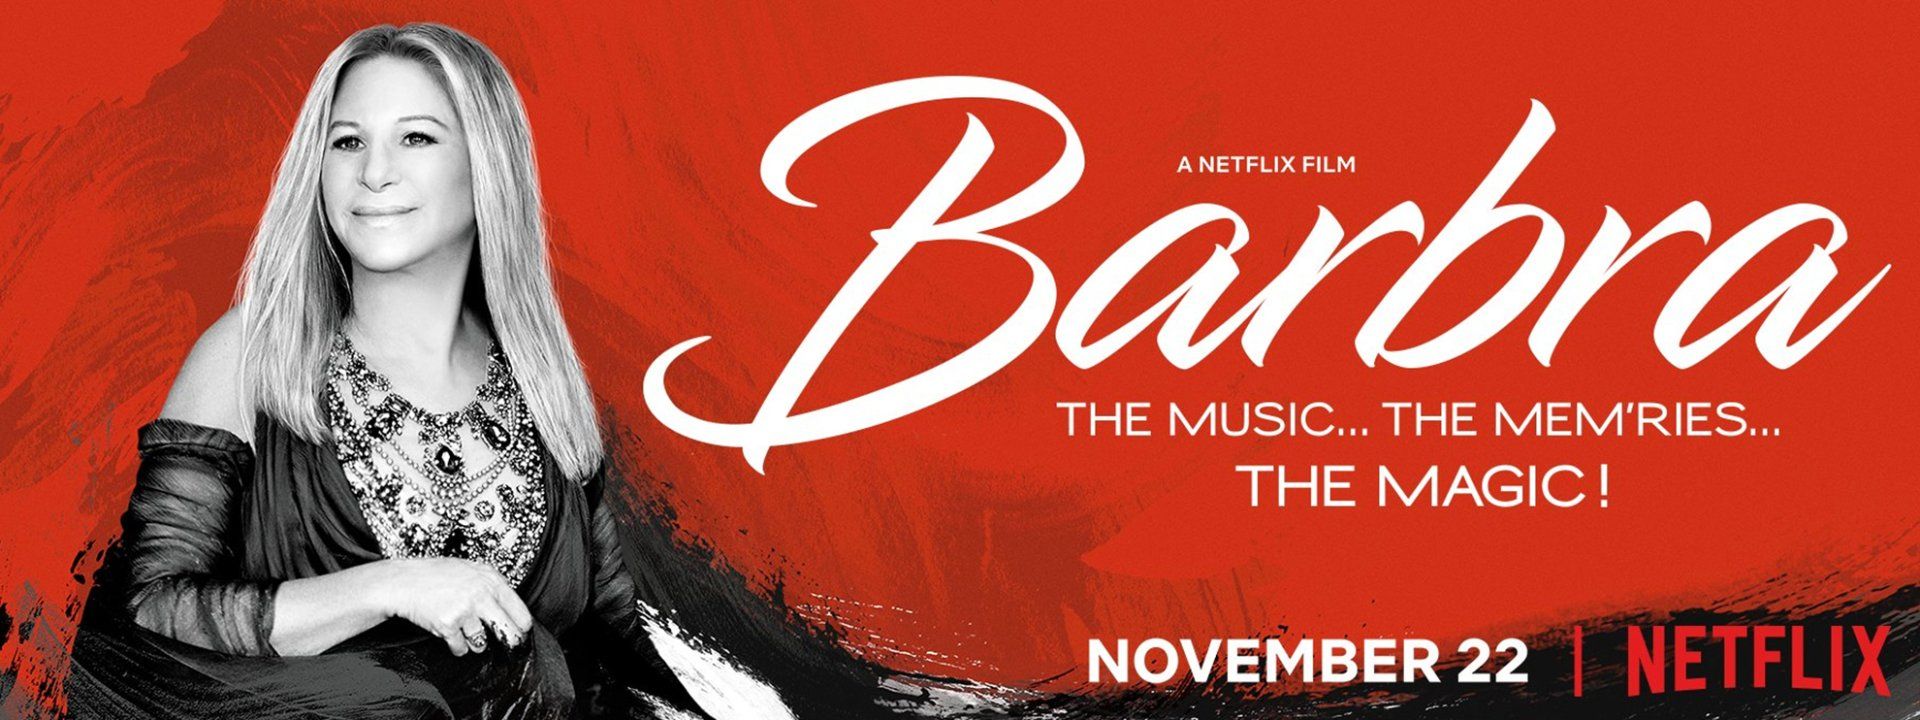 Netflix original artwork for Streisand concert